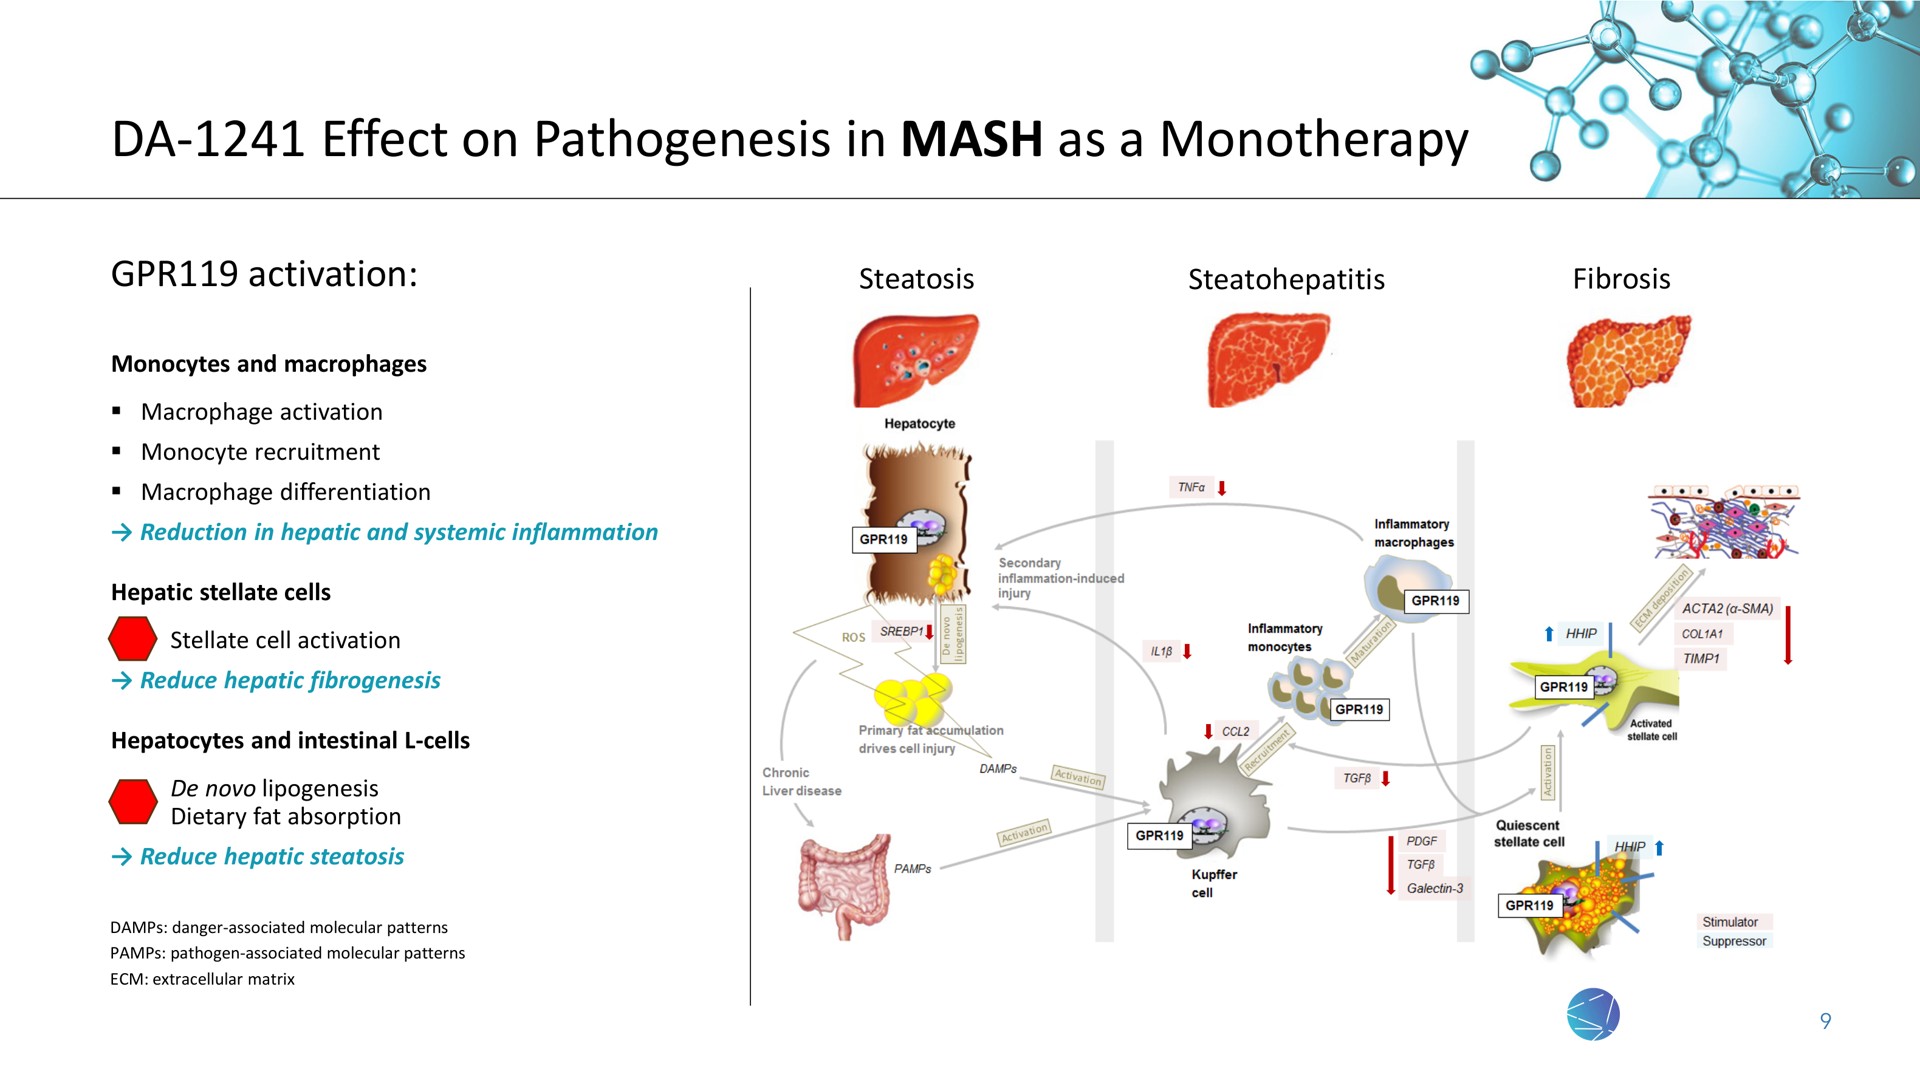 effect on pathogenesis in mash as a | NeuroBo Pharmaceuticals